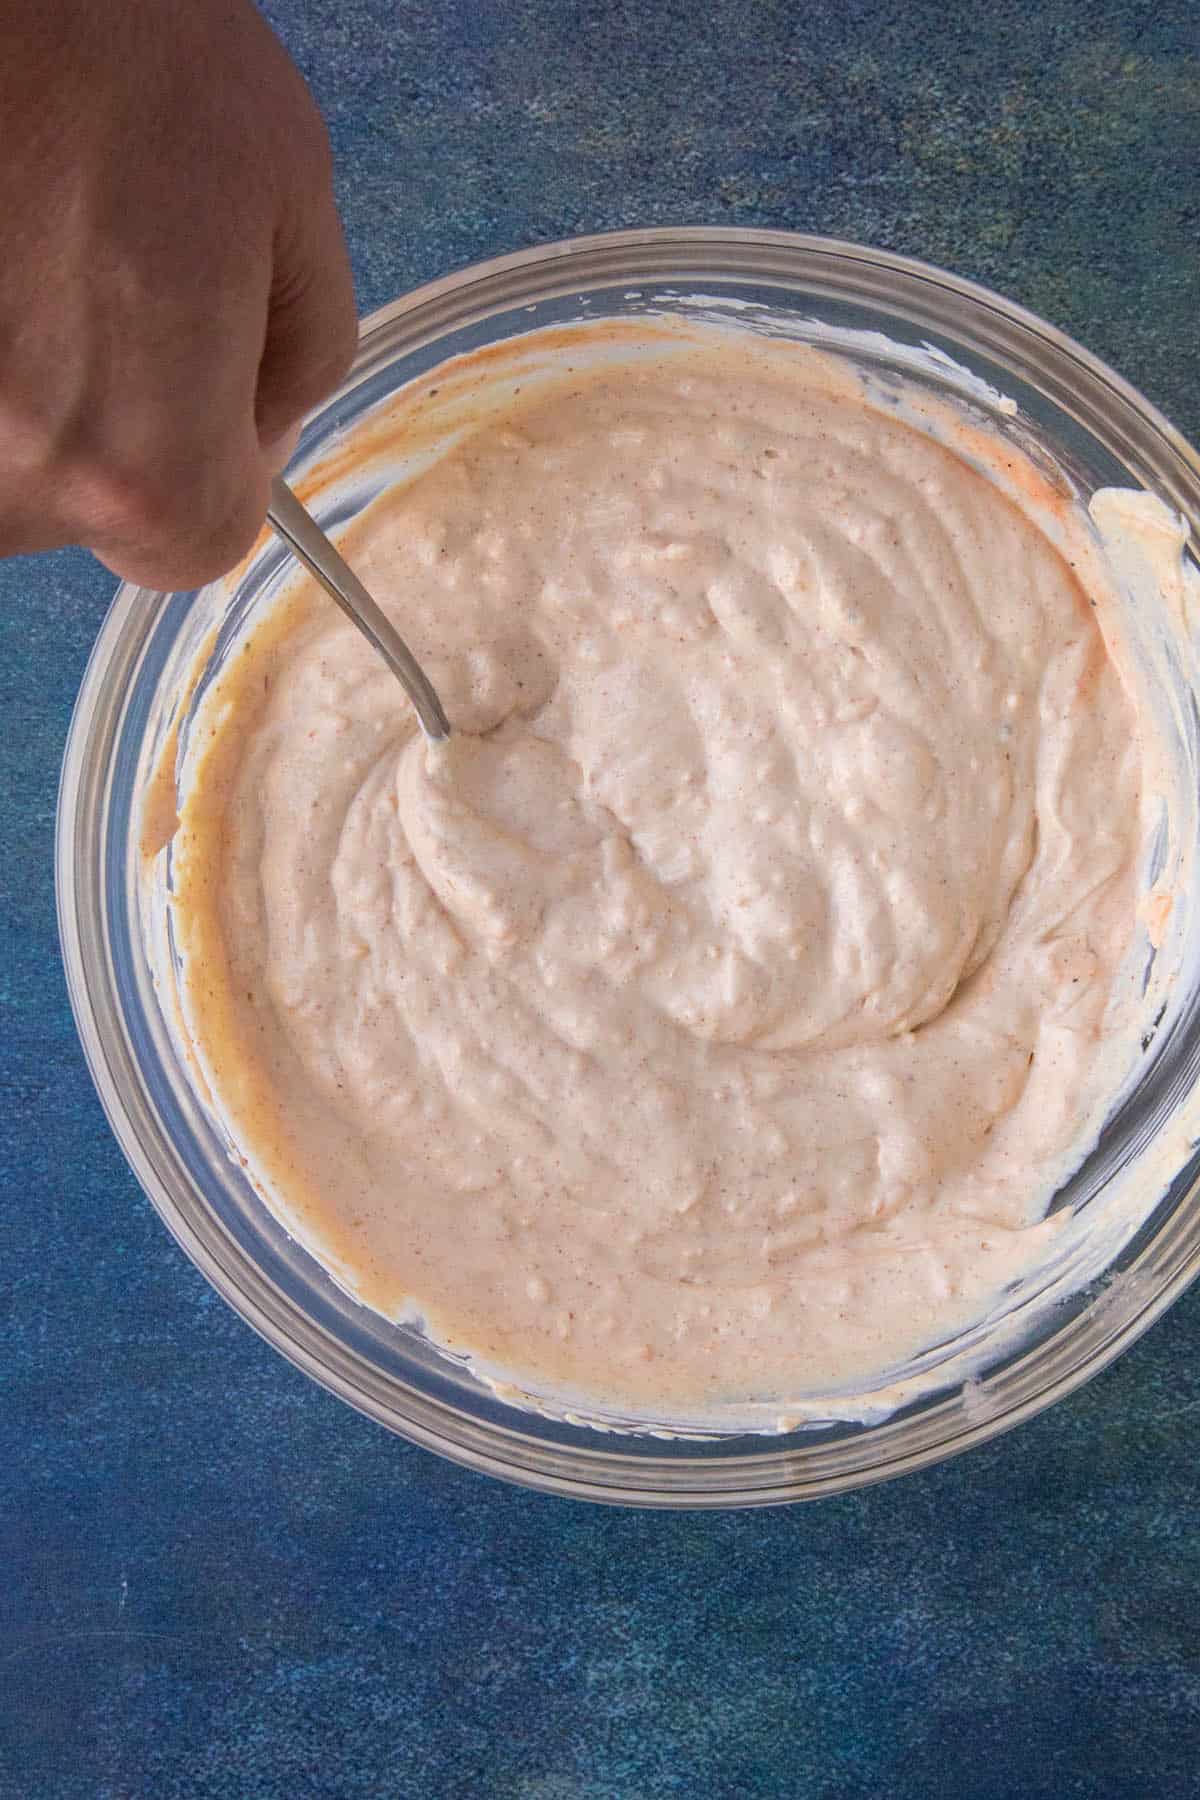 Mixed sour cream dip in a bowl.